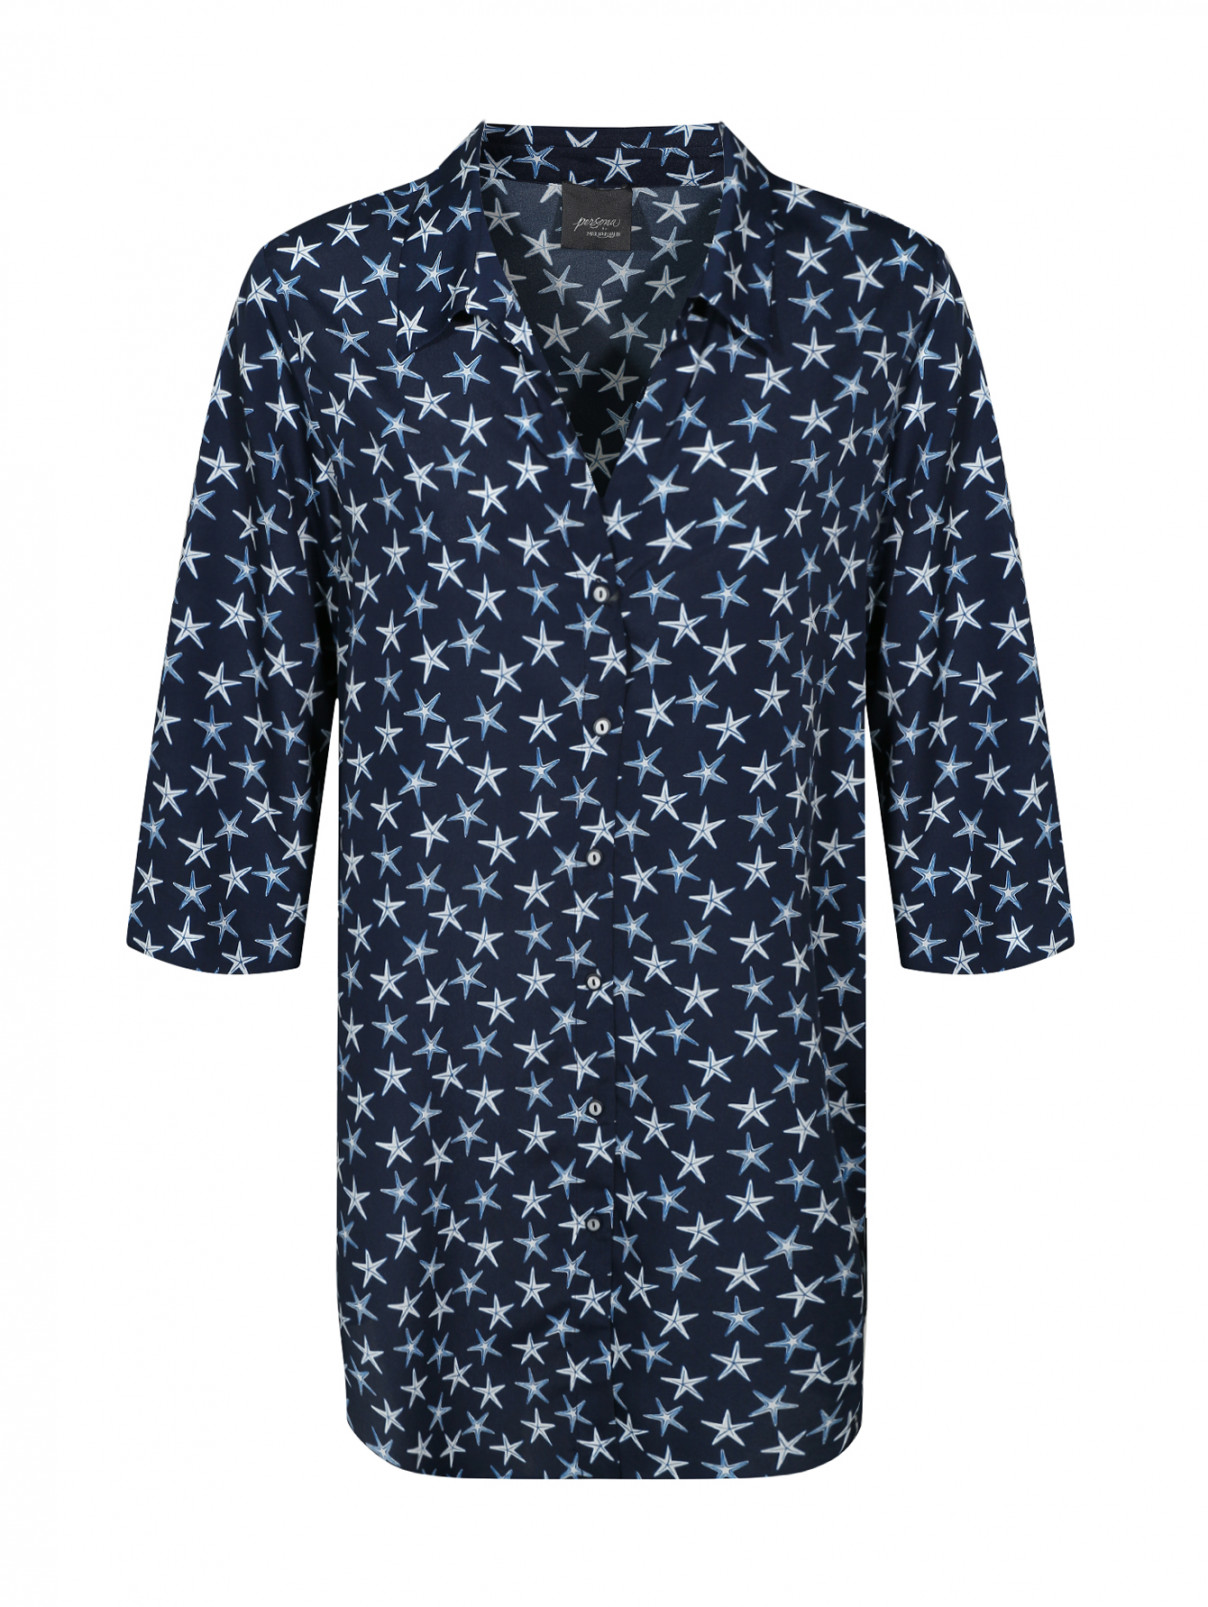 Блуза свободного кроя с узором Persona by Marina Rinaldi  –  Общий вид  – Цвет:  Синий